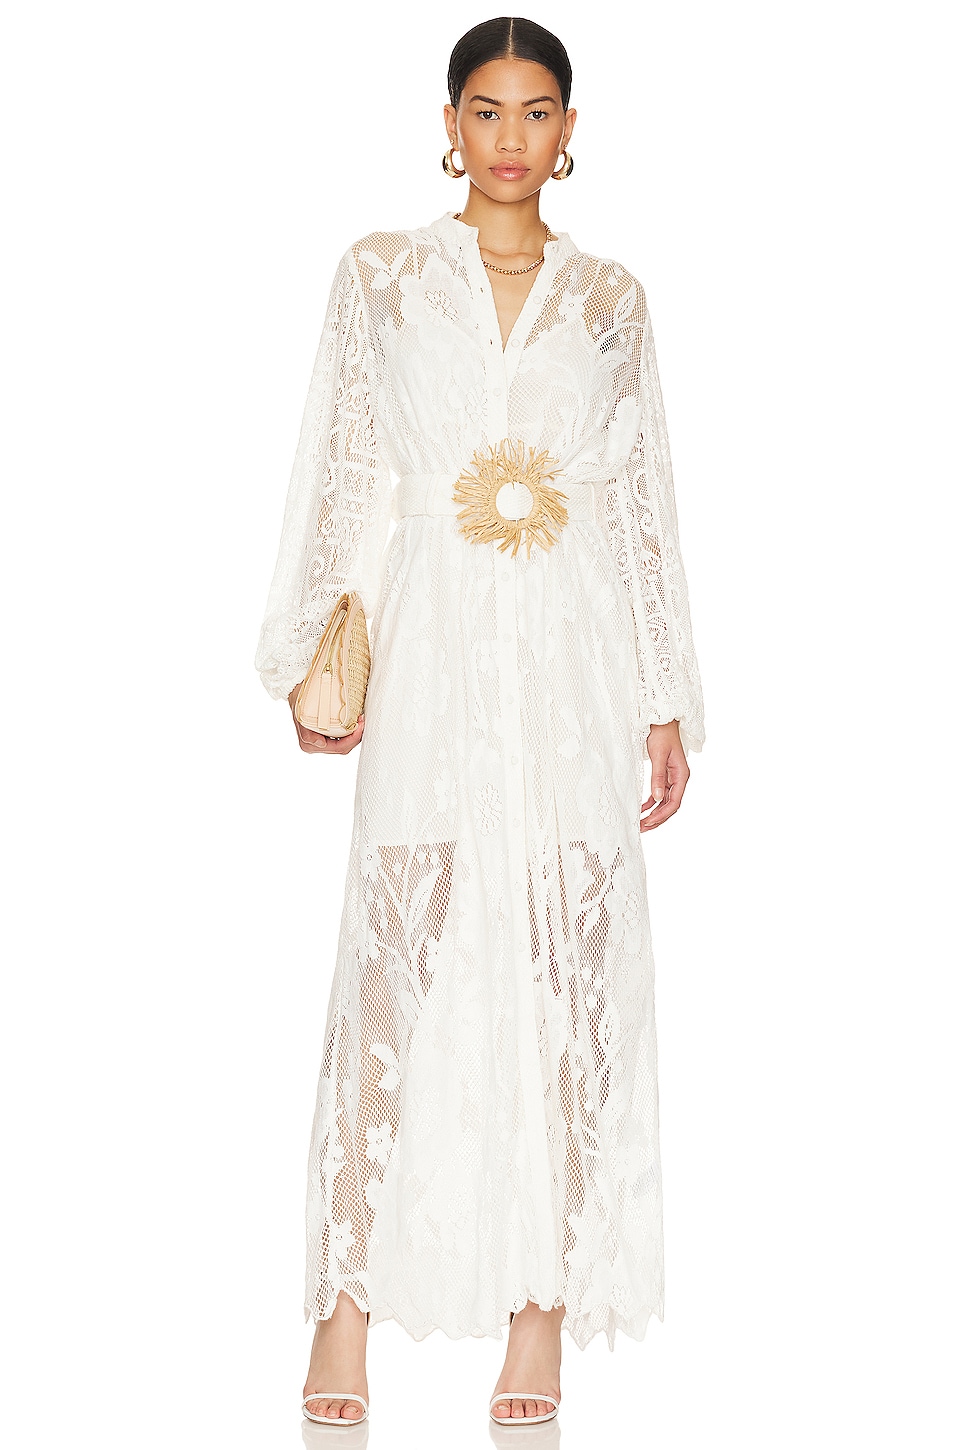 A White Dress for Summer: Like A Greek Goddess - Jennysgou